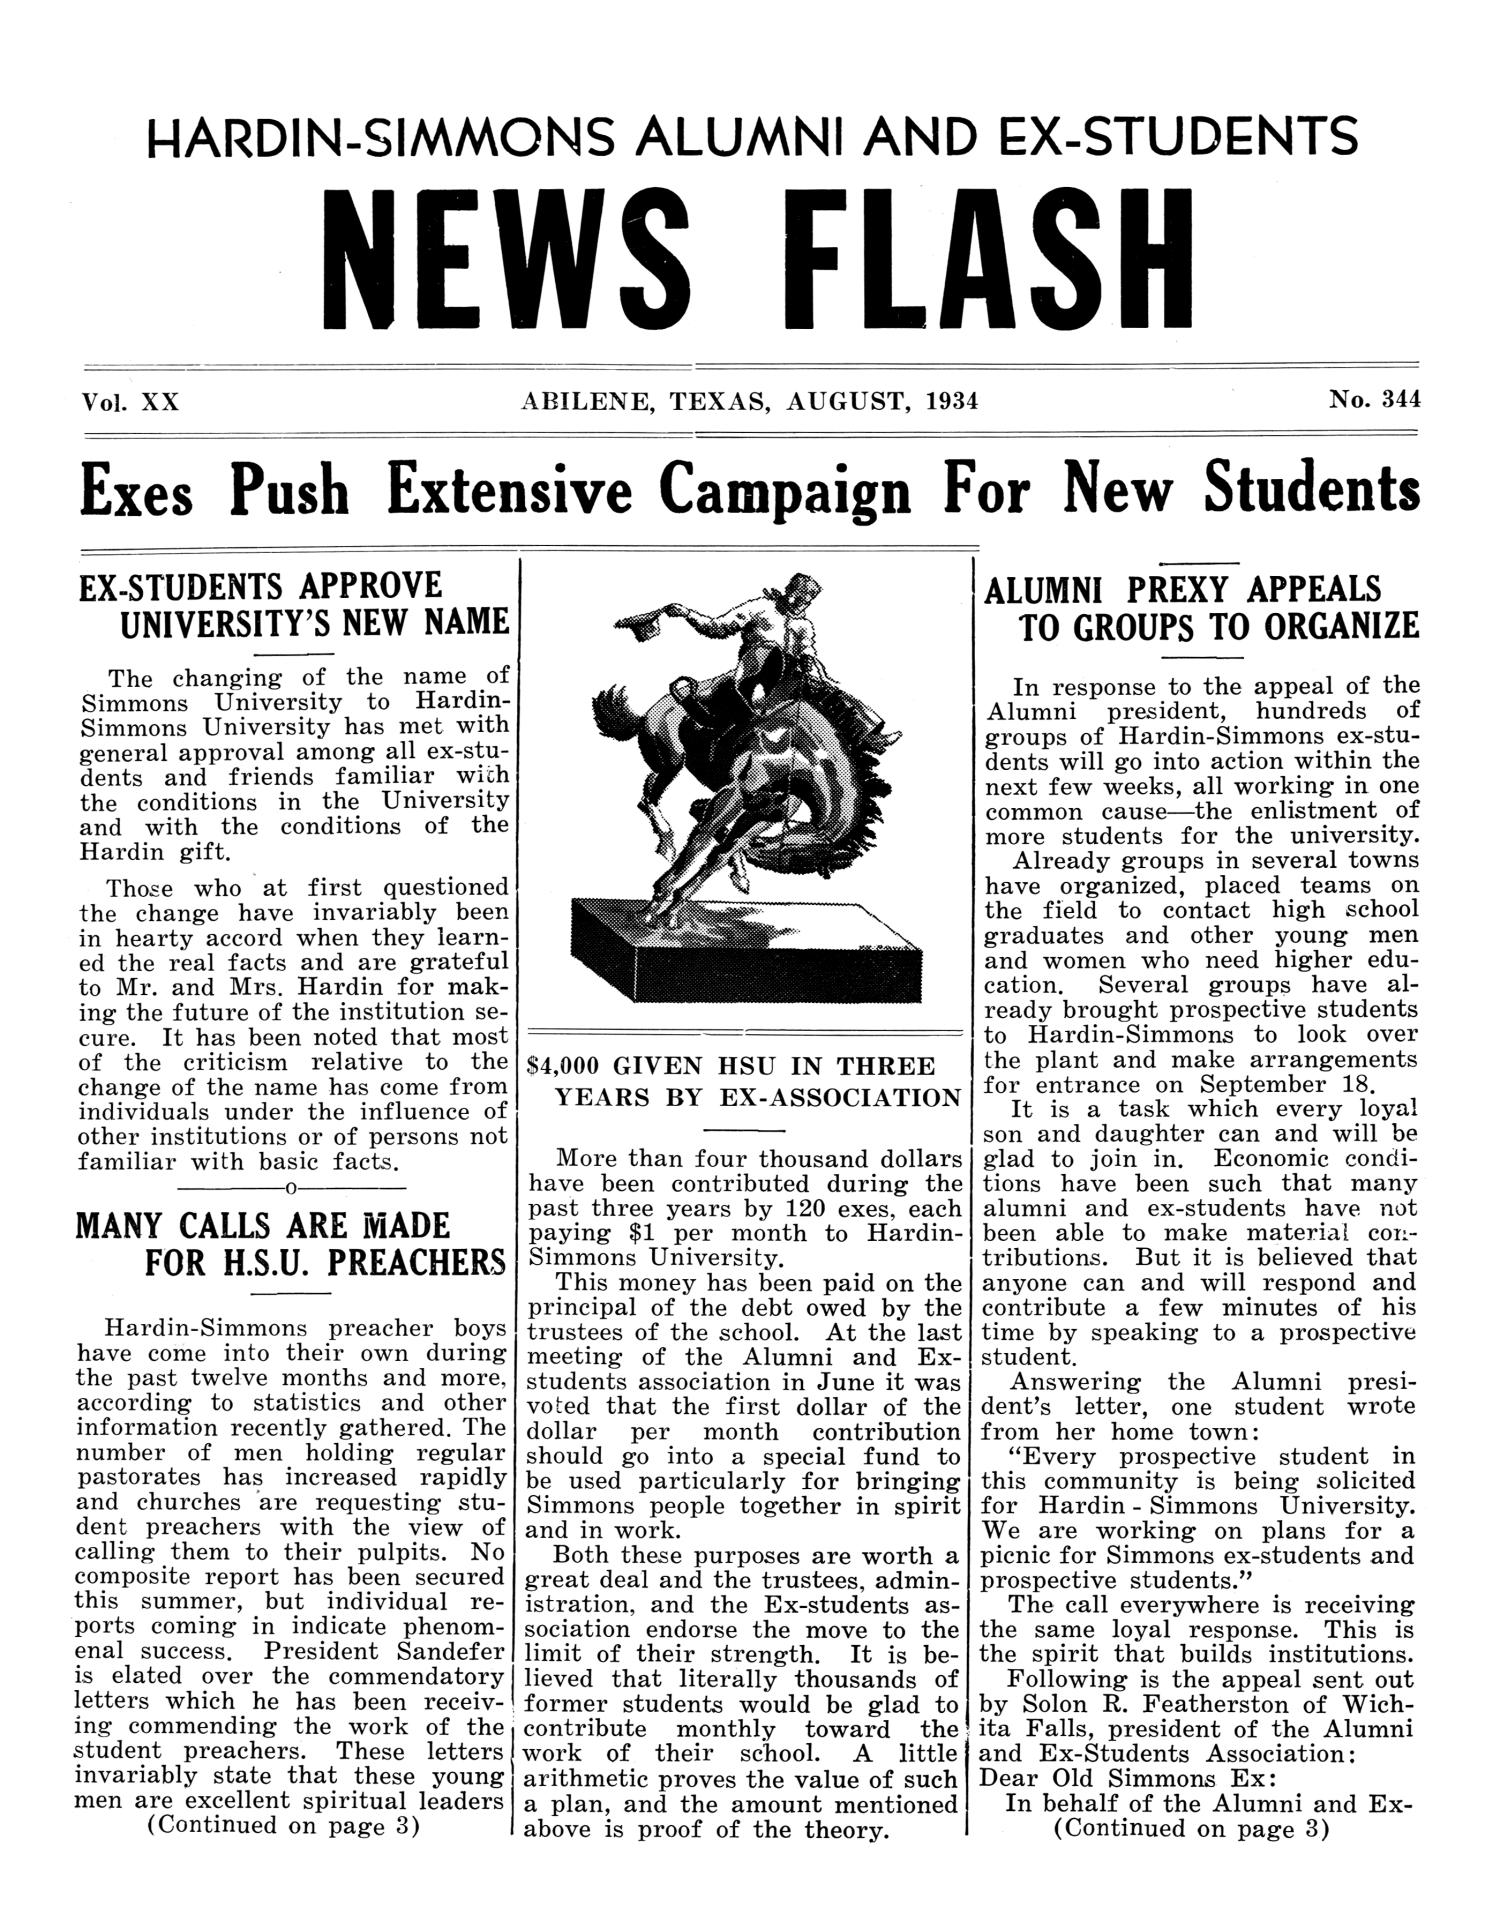 Hardin-Simmons Alumni and Ex-Students News Flash, August 1934
                                                
                                                    1
                                                